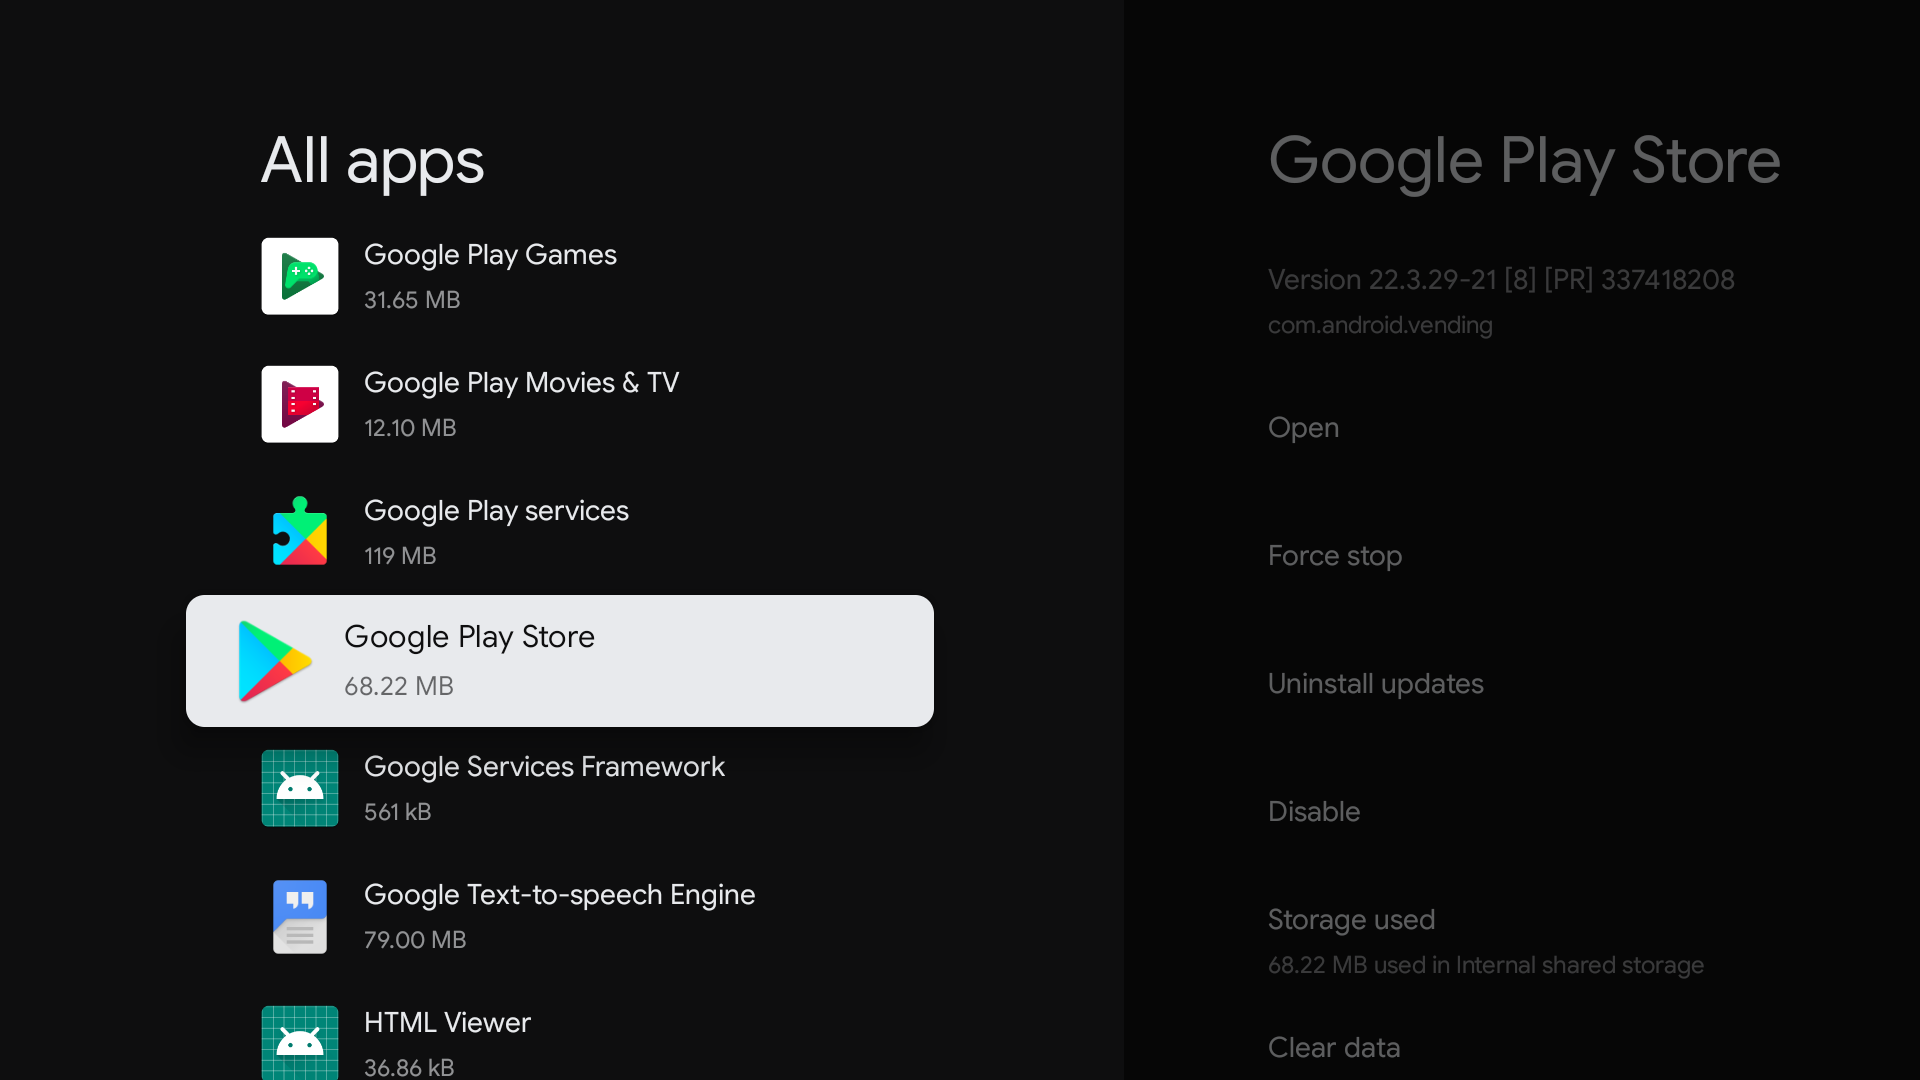 Chromecast with Google TV - Google Store